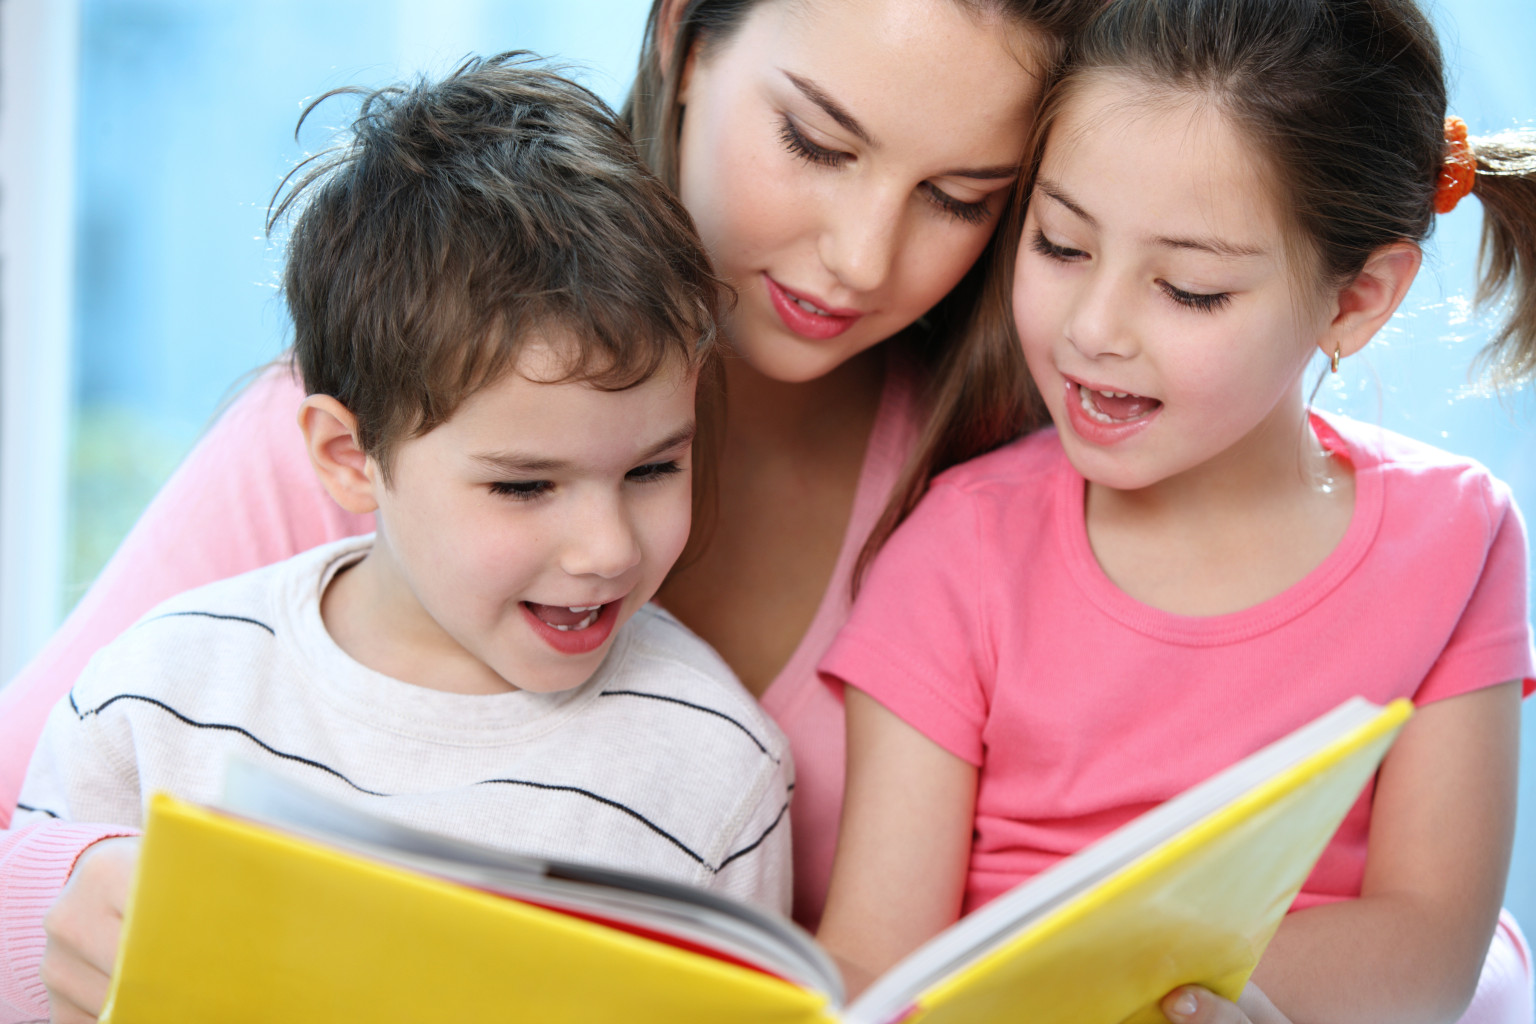 Nanny reading to children